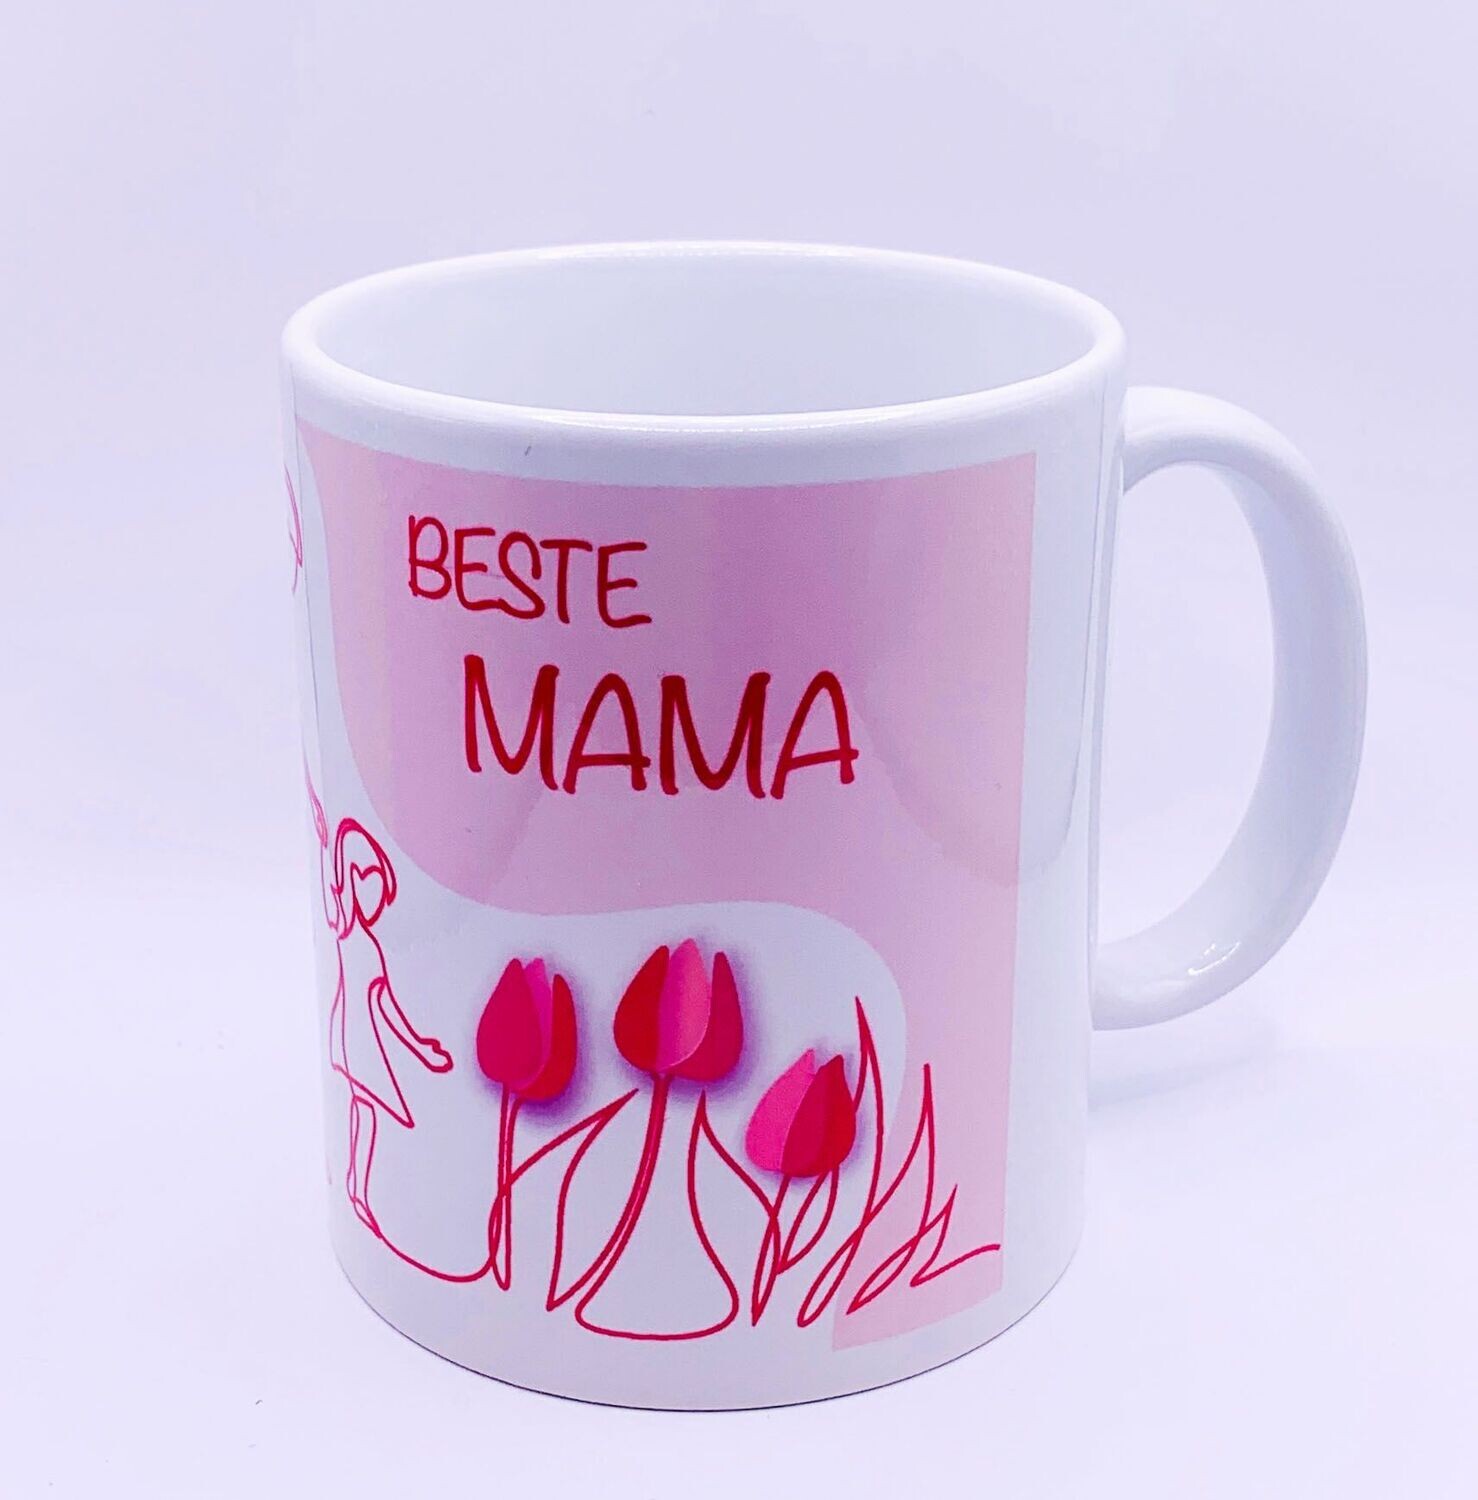 Tasse weiß aus Keramik 330 ml , Bilddatei "Beste Mama"